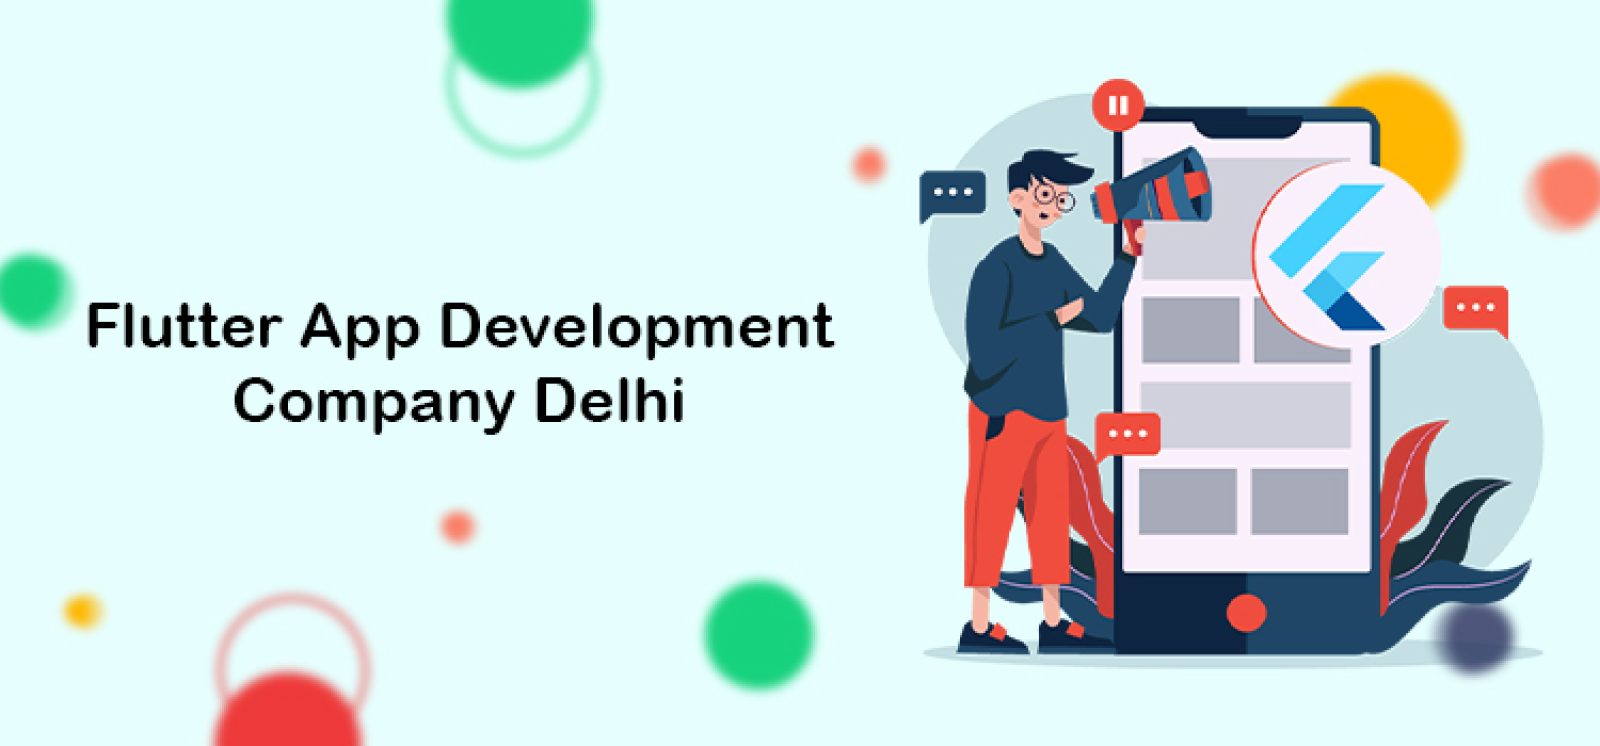 Flutter App Development Company Delhi